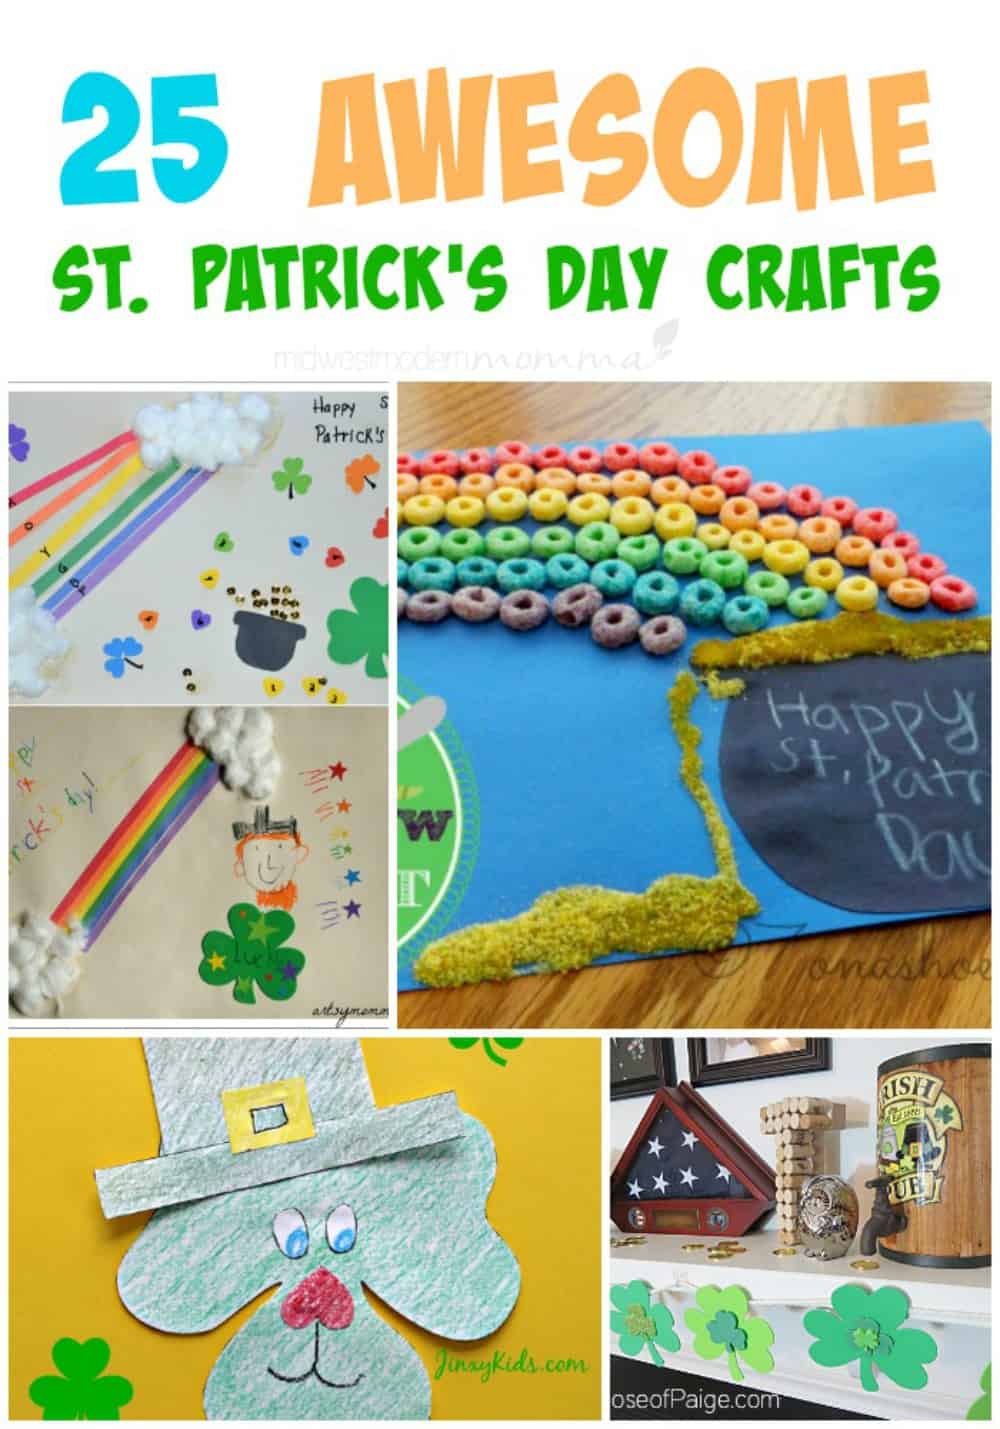 25 St. Patrick’s Day Crafts